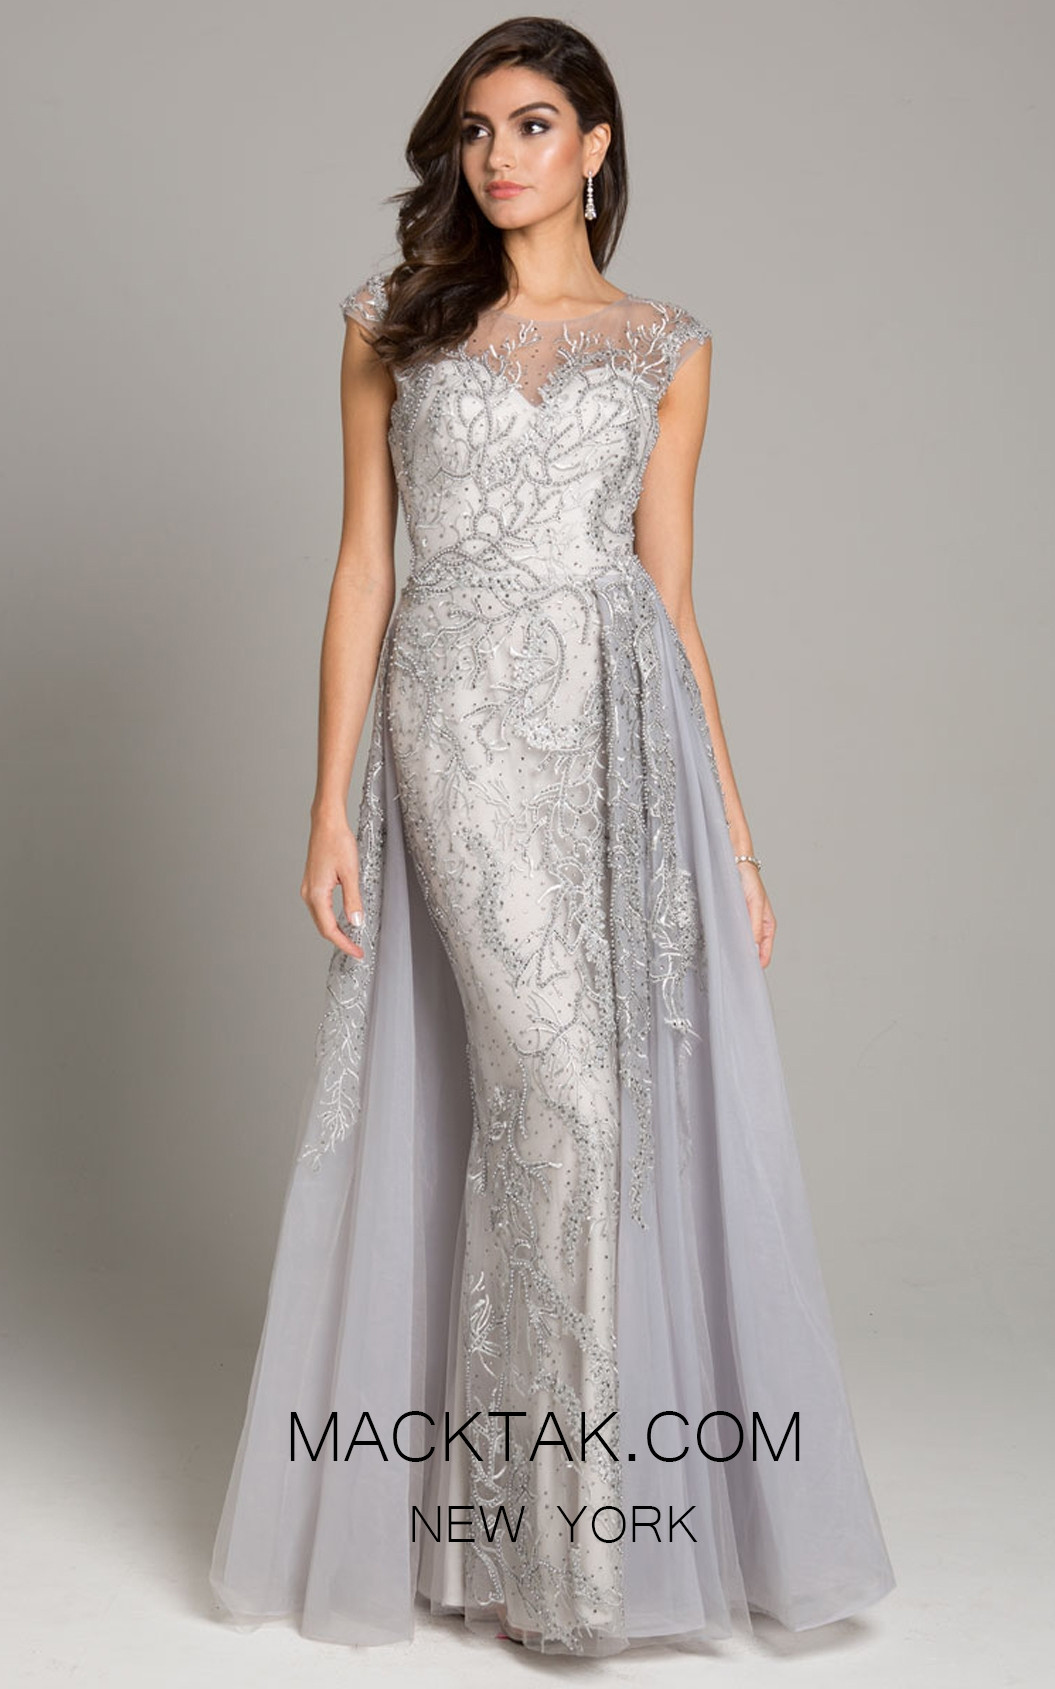 Lara 33621 Silver Front Dress